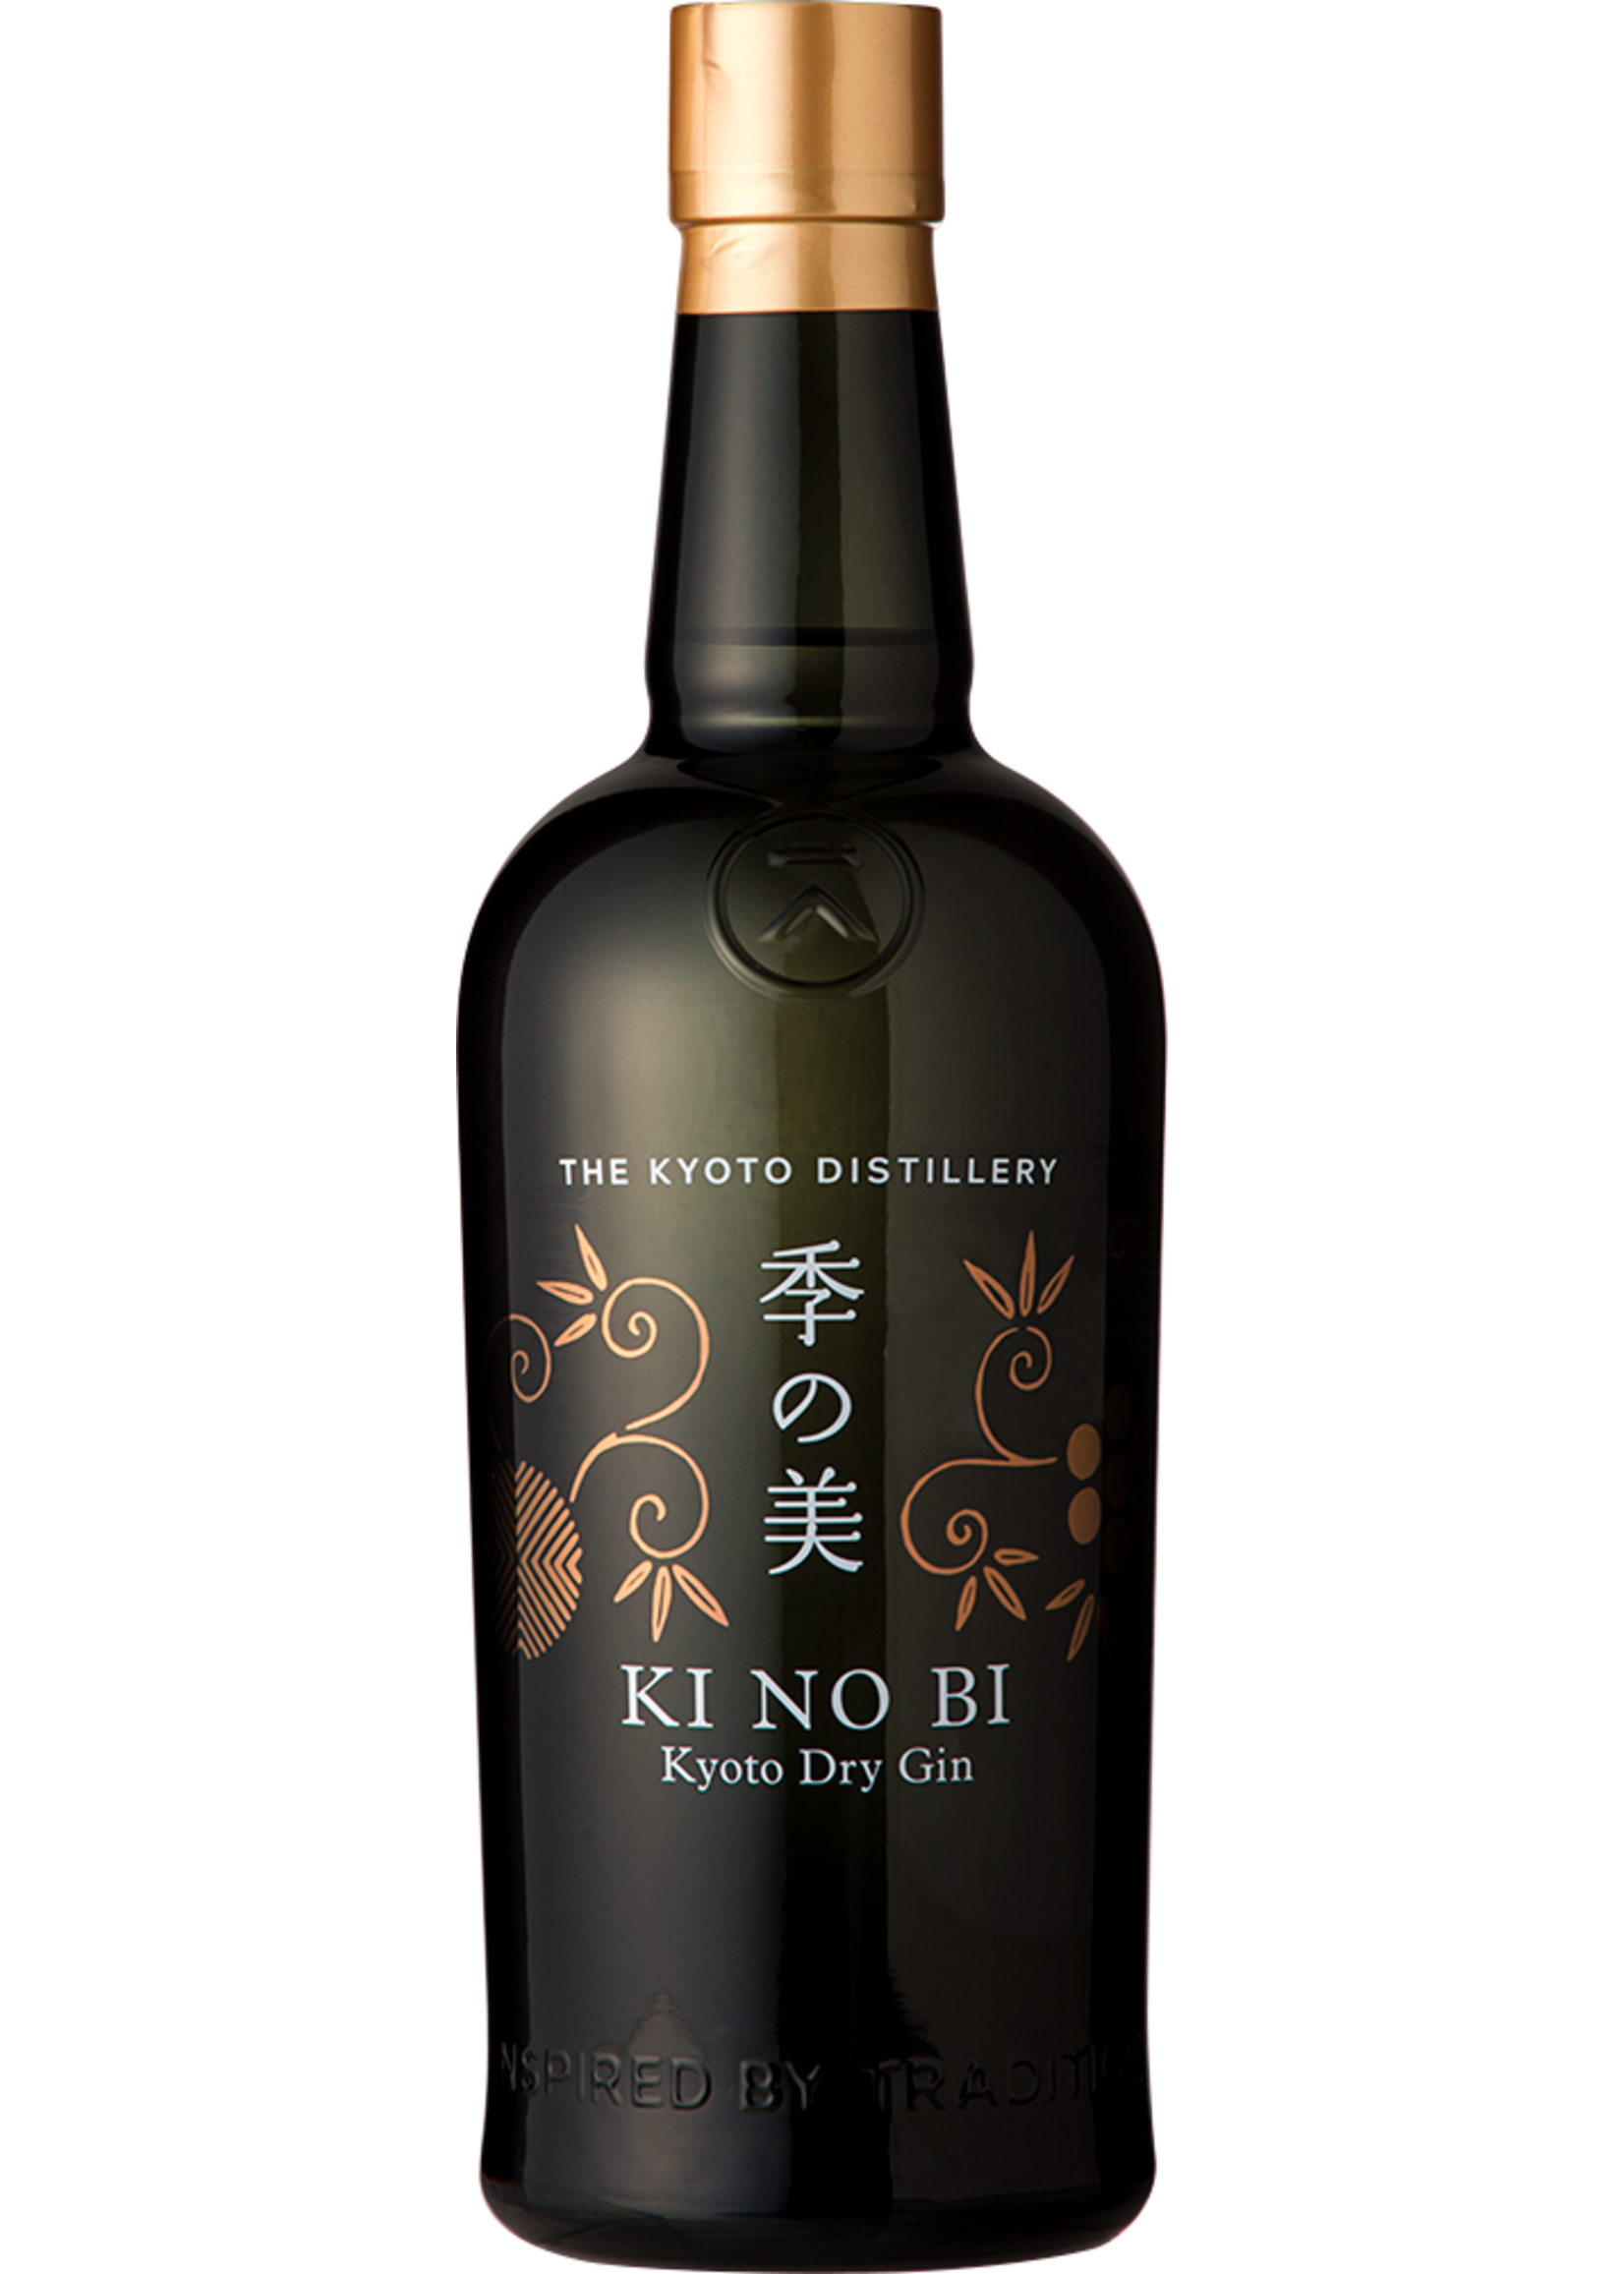 The Kyoto Distillery The Kyoto Distillery / Ki No Bi Japanese Gin 45.7% abv / 750mL